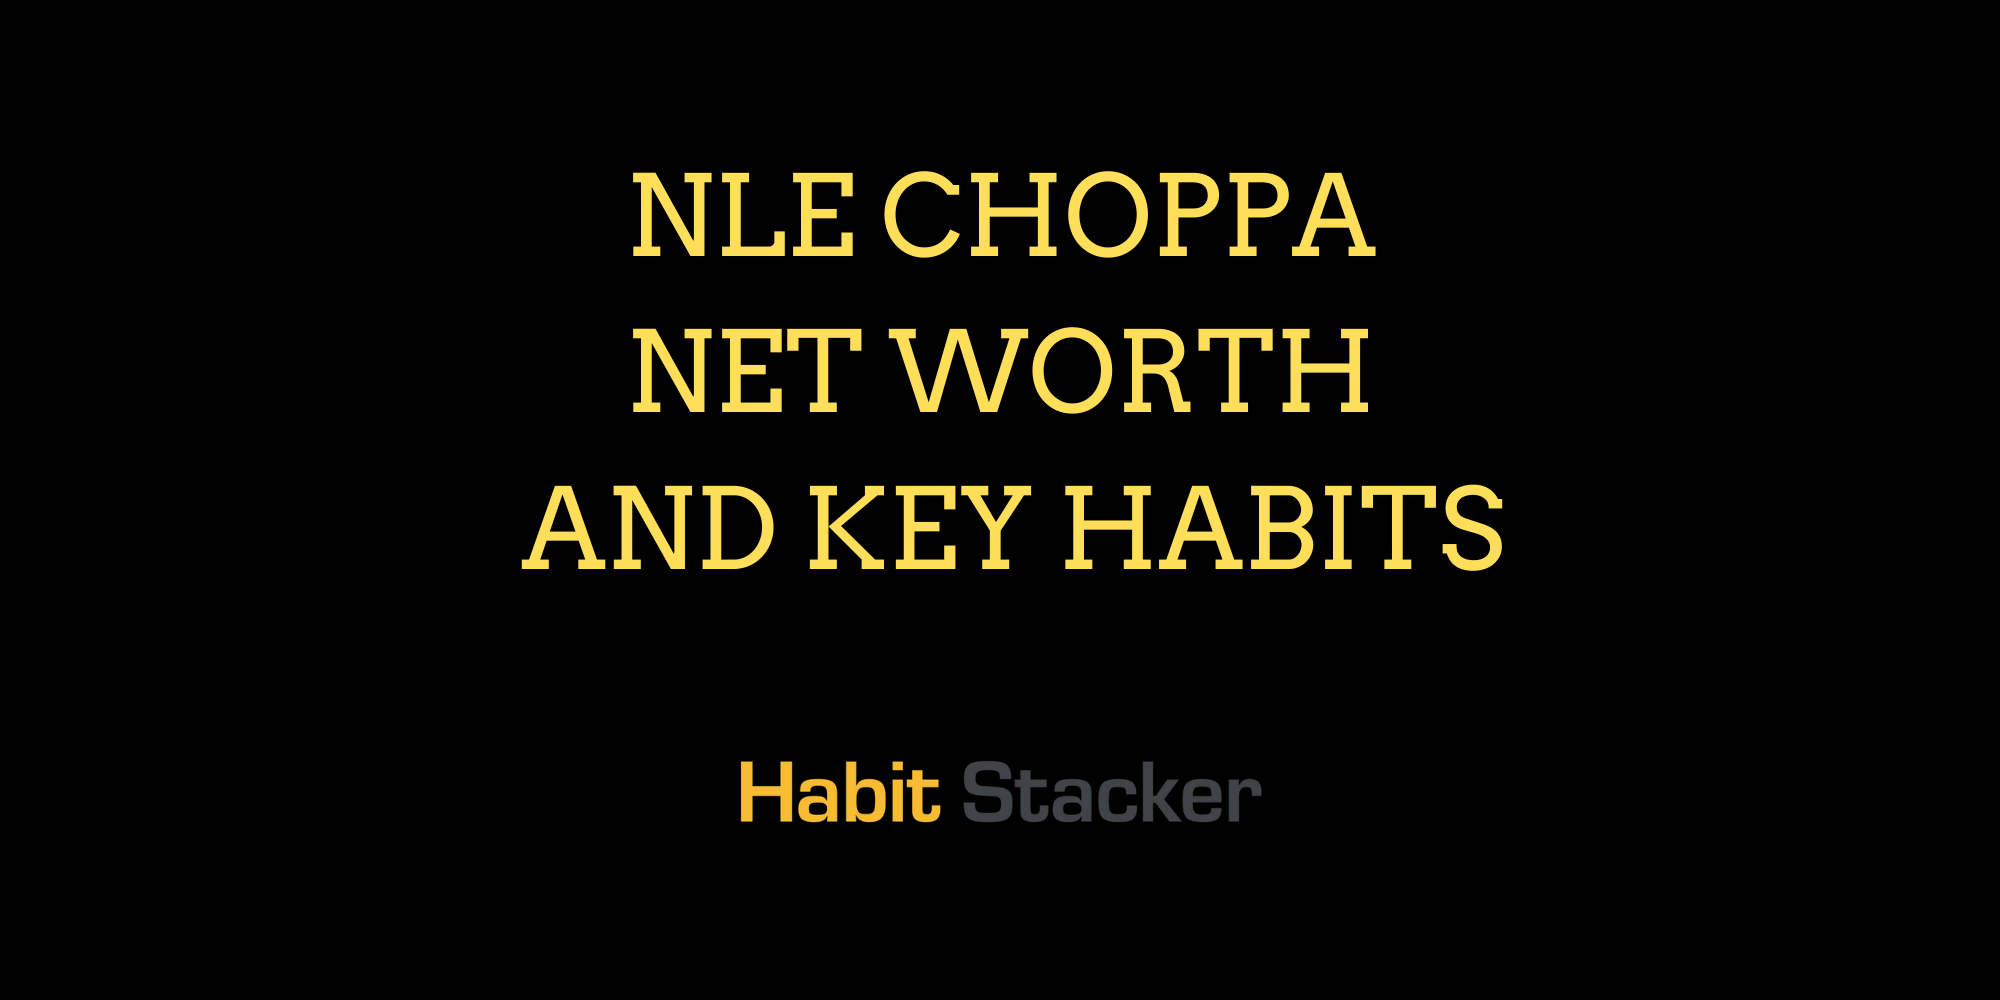 NLE Choppa Net Worth and Key Habits